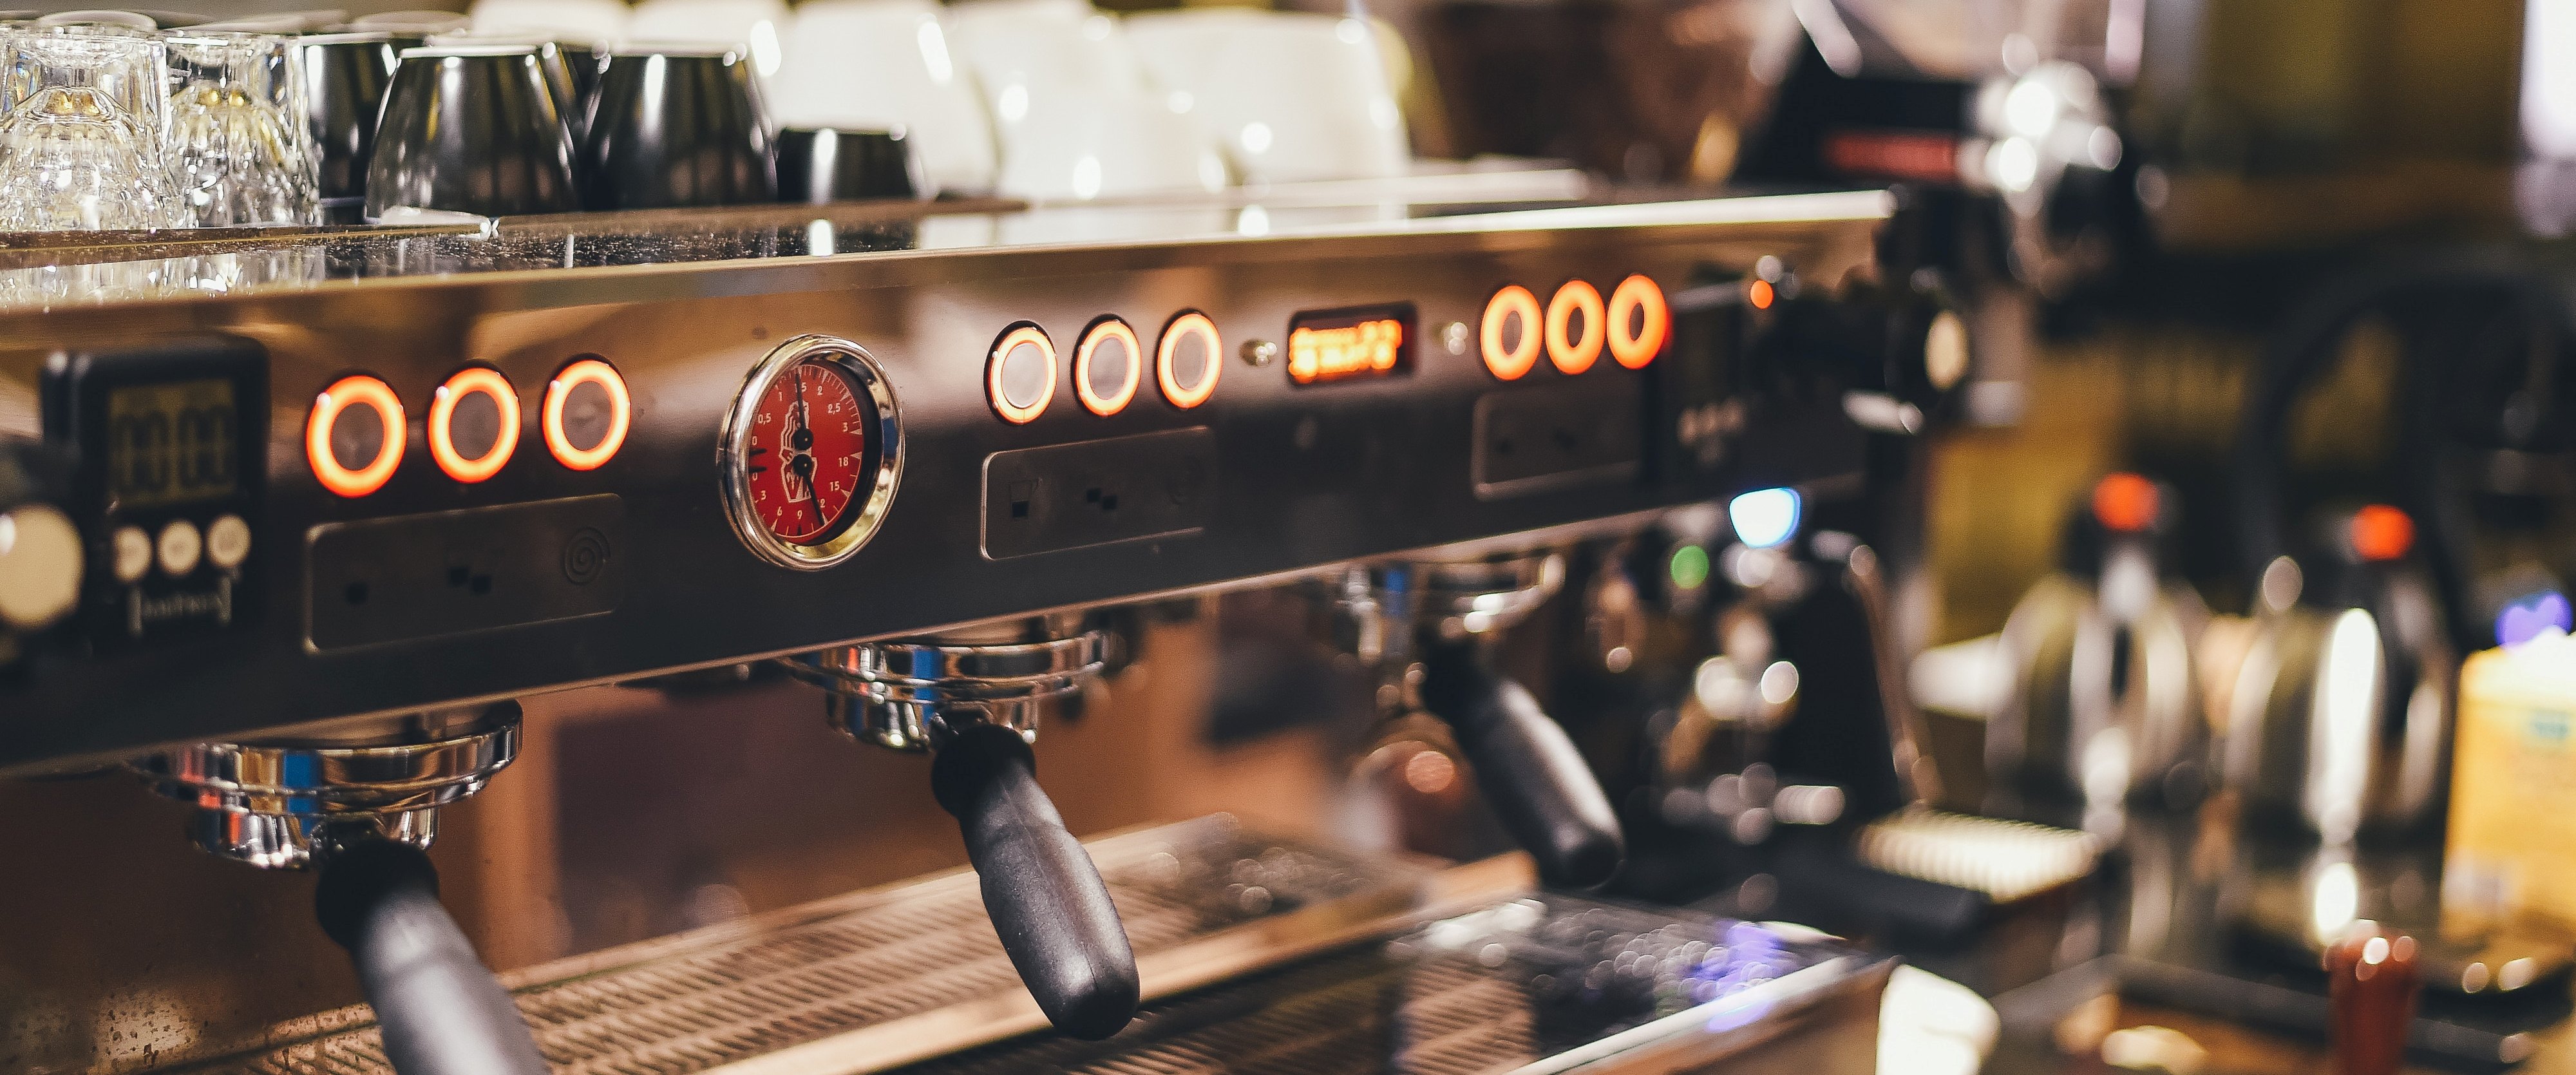 кофемашина, coffee machine